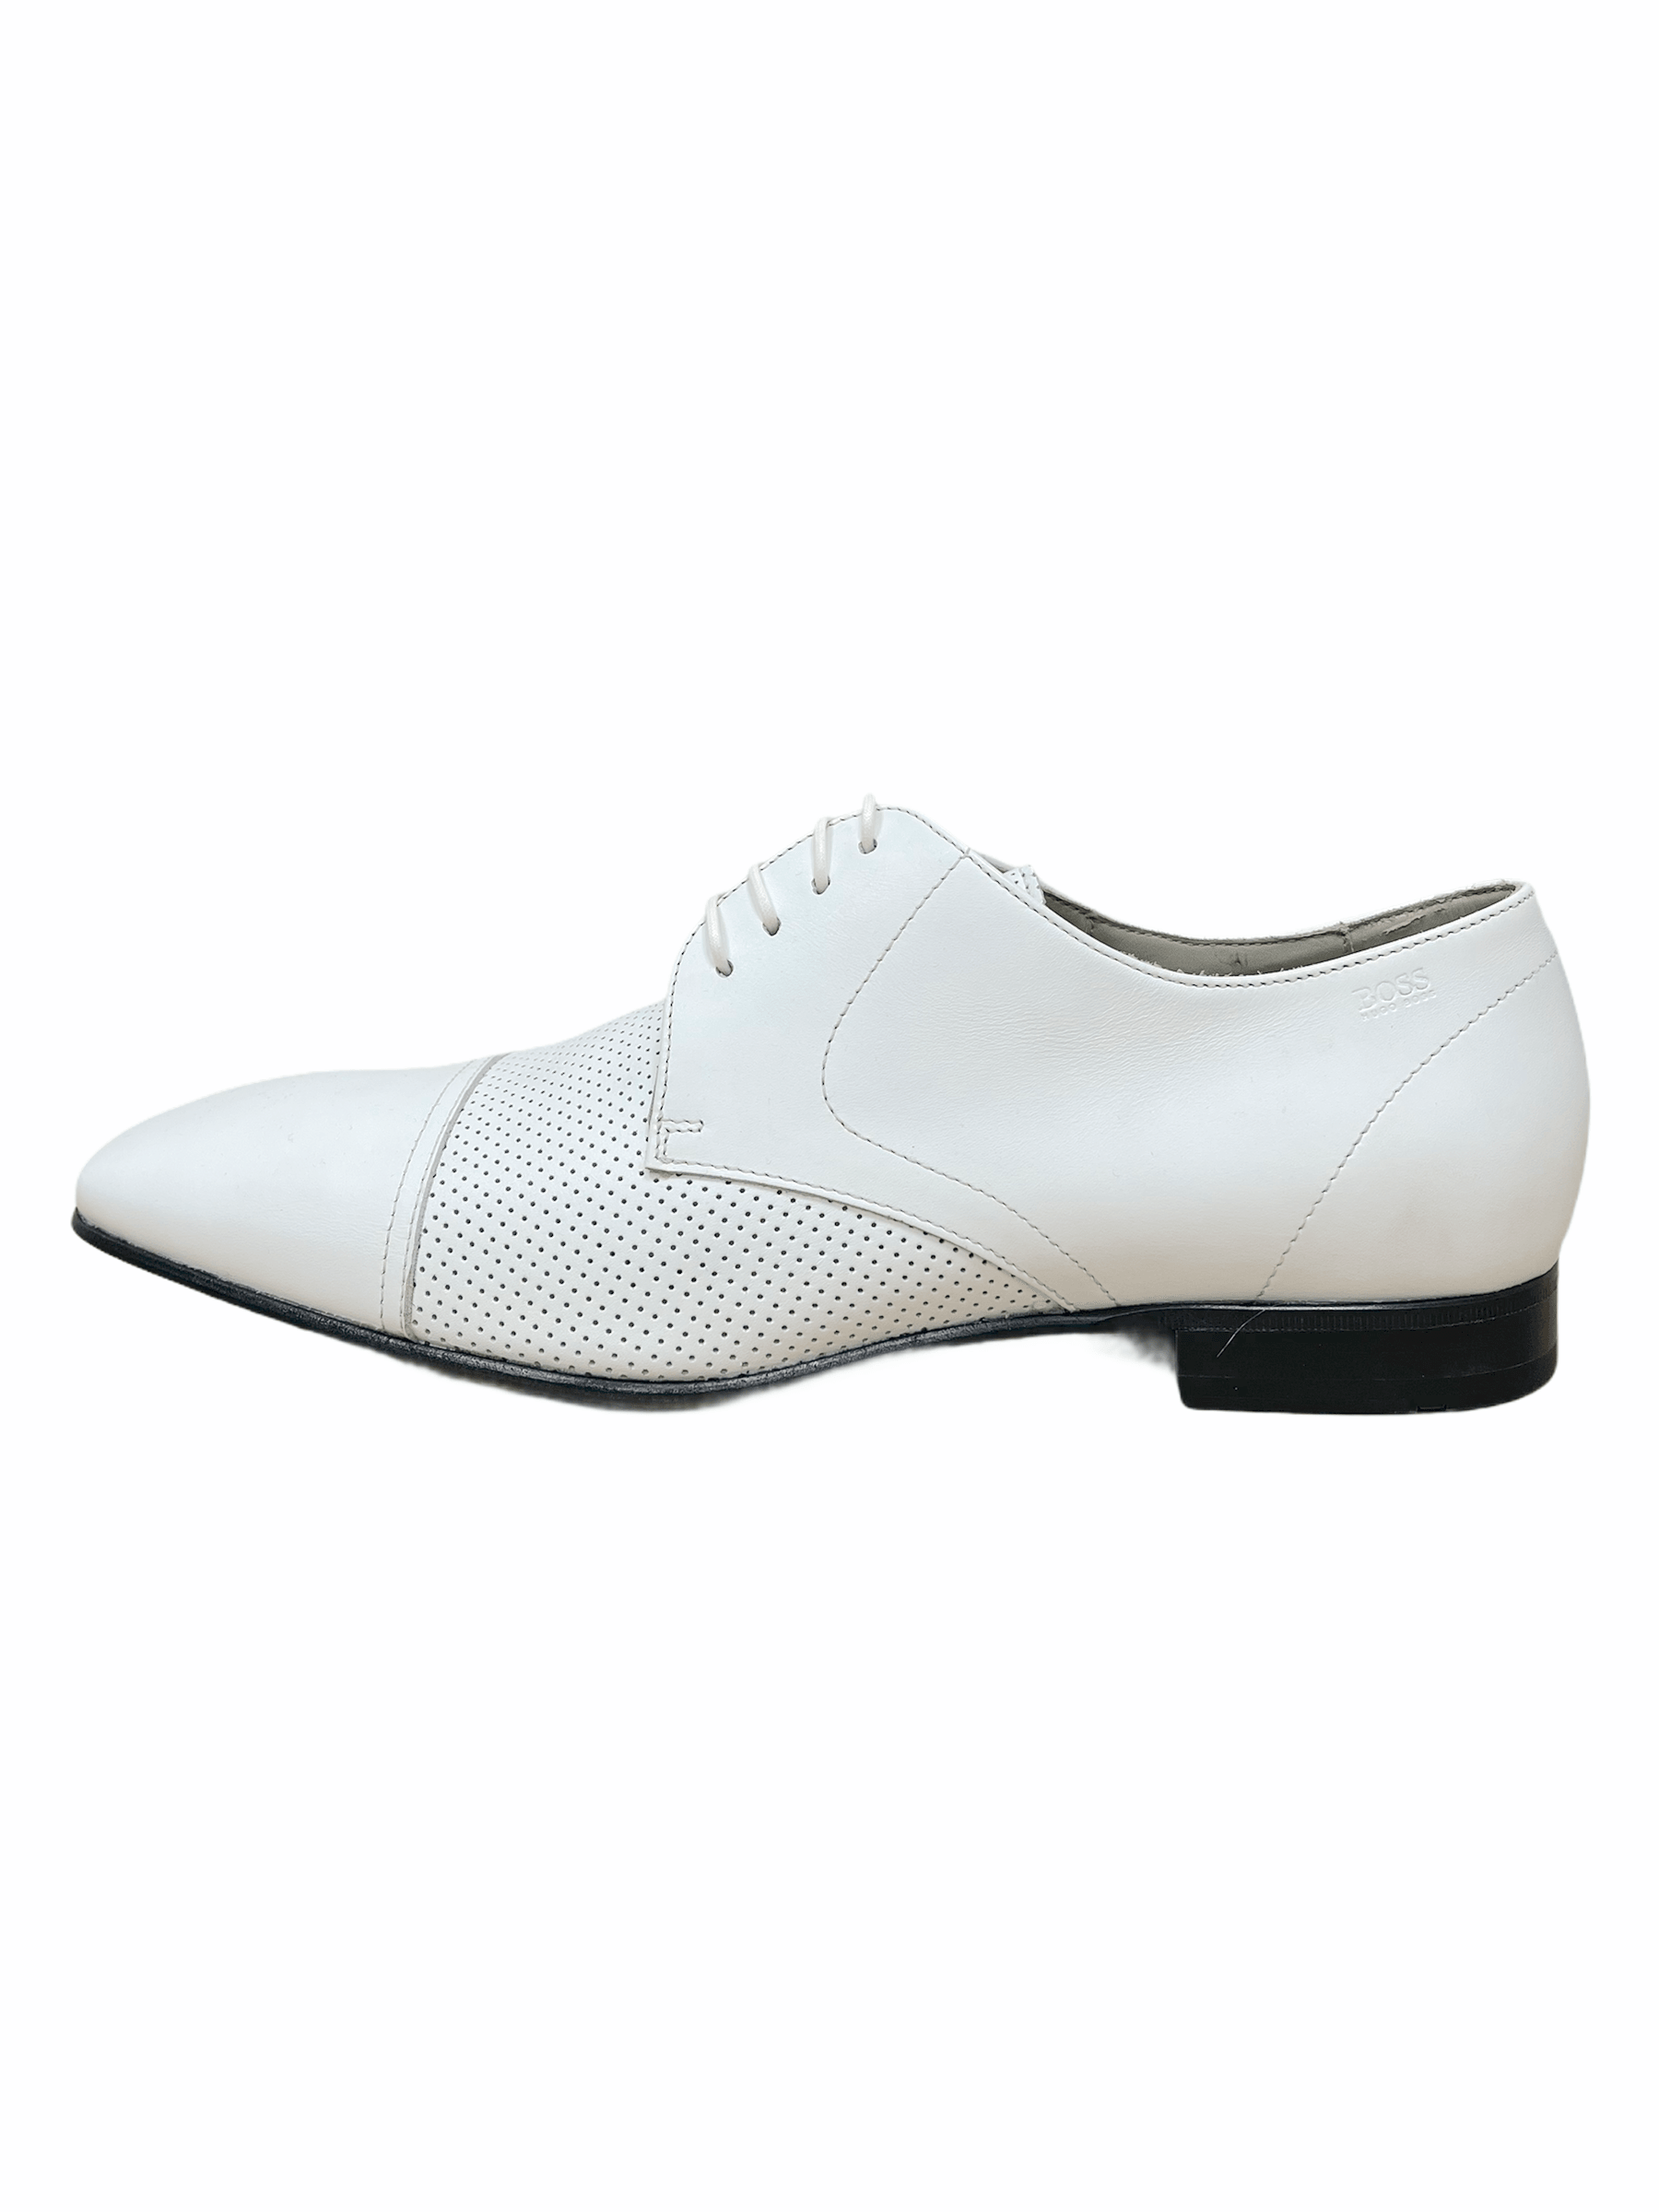 Hugo Boss White Cap Toe Formal 7.5 D Dress Shoes - Genuine Design Luxury Consignment